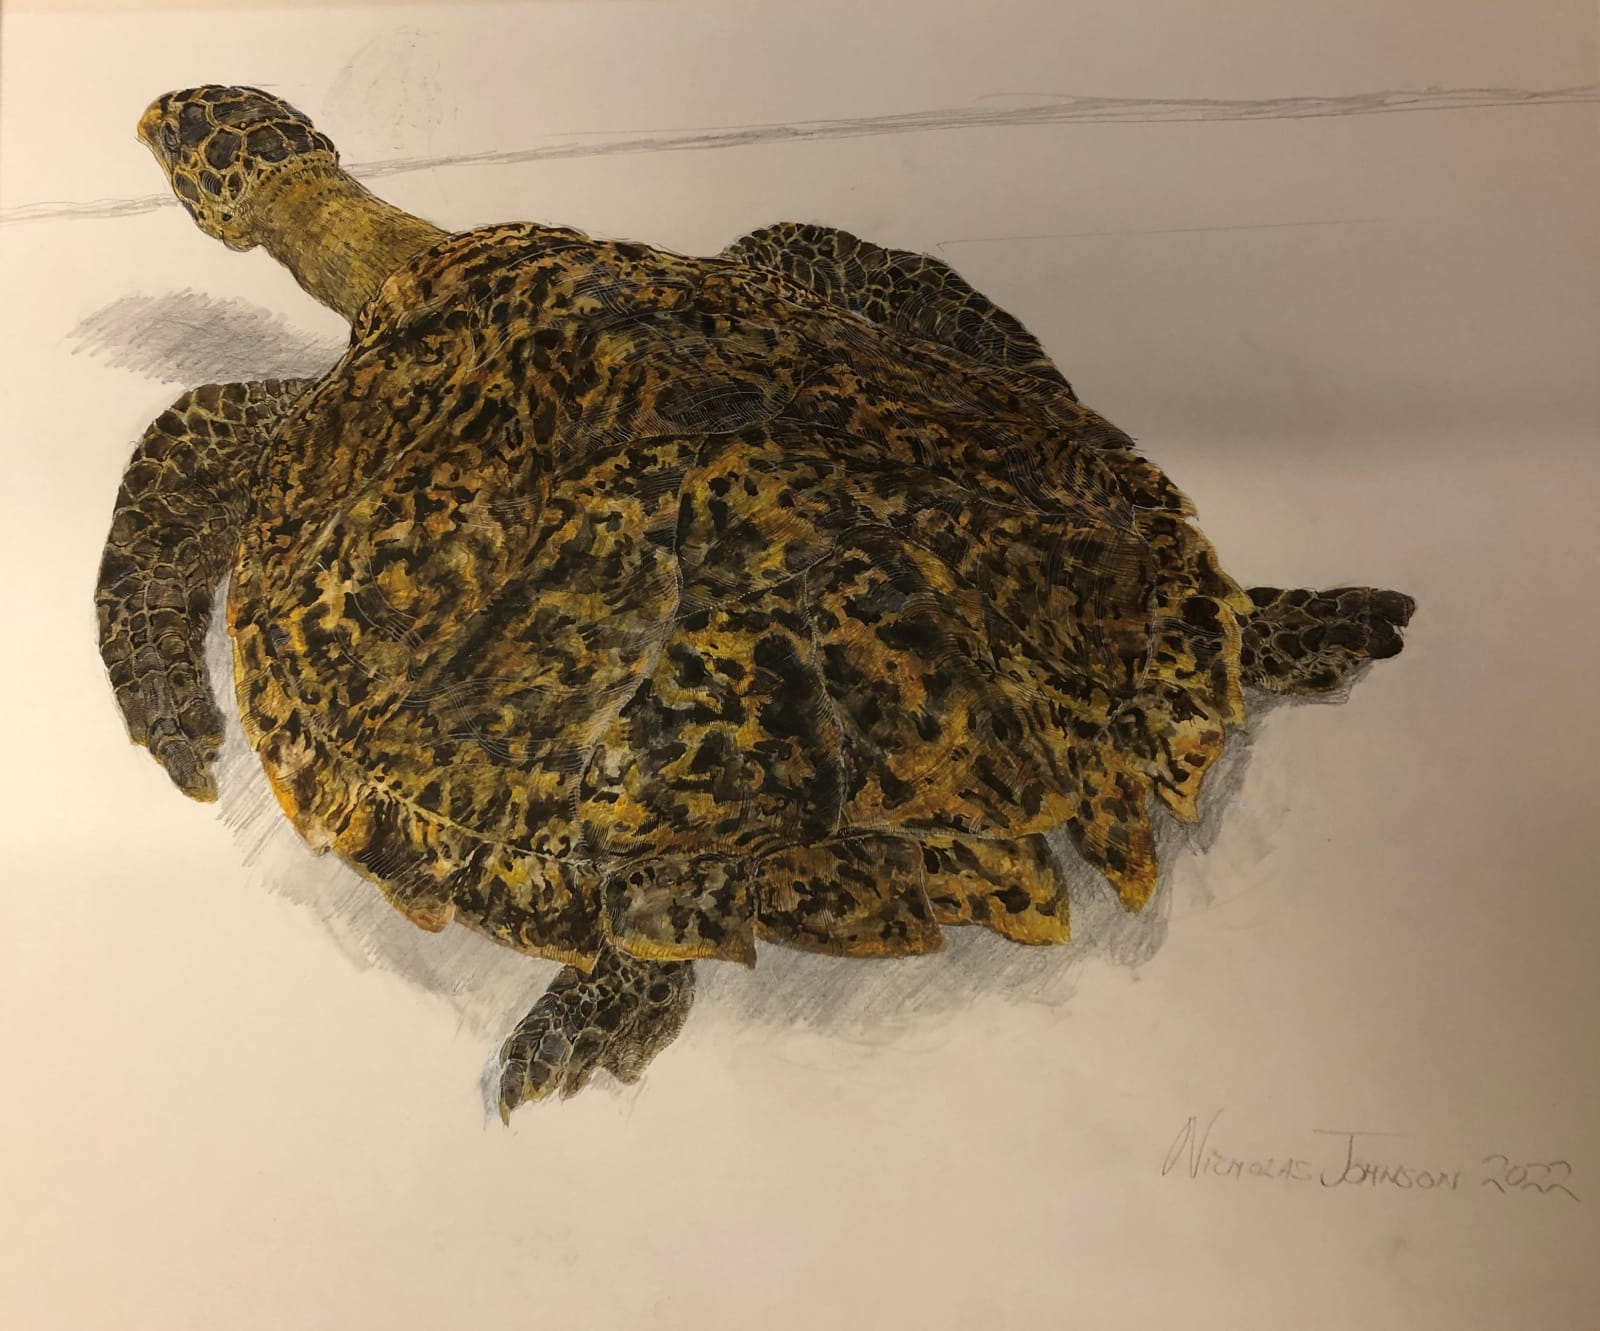 NICHOLAS JOHNSON, Turtle, 2022